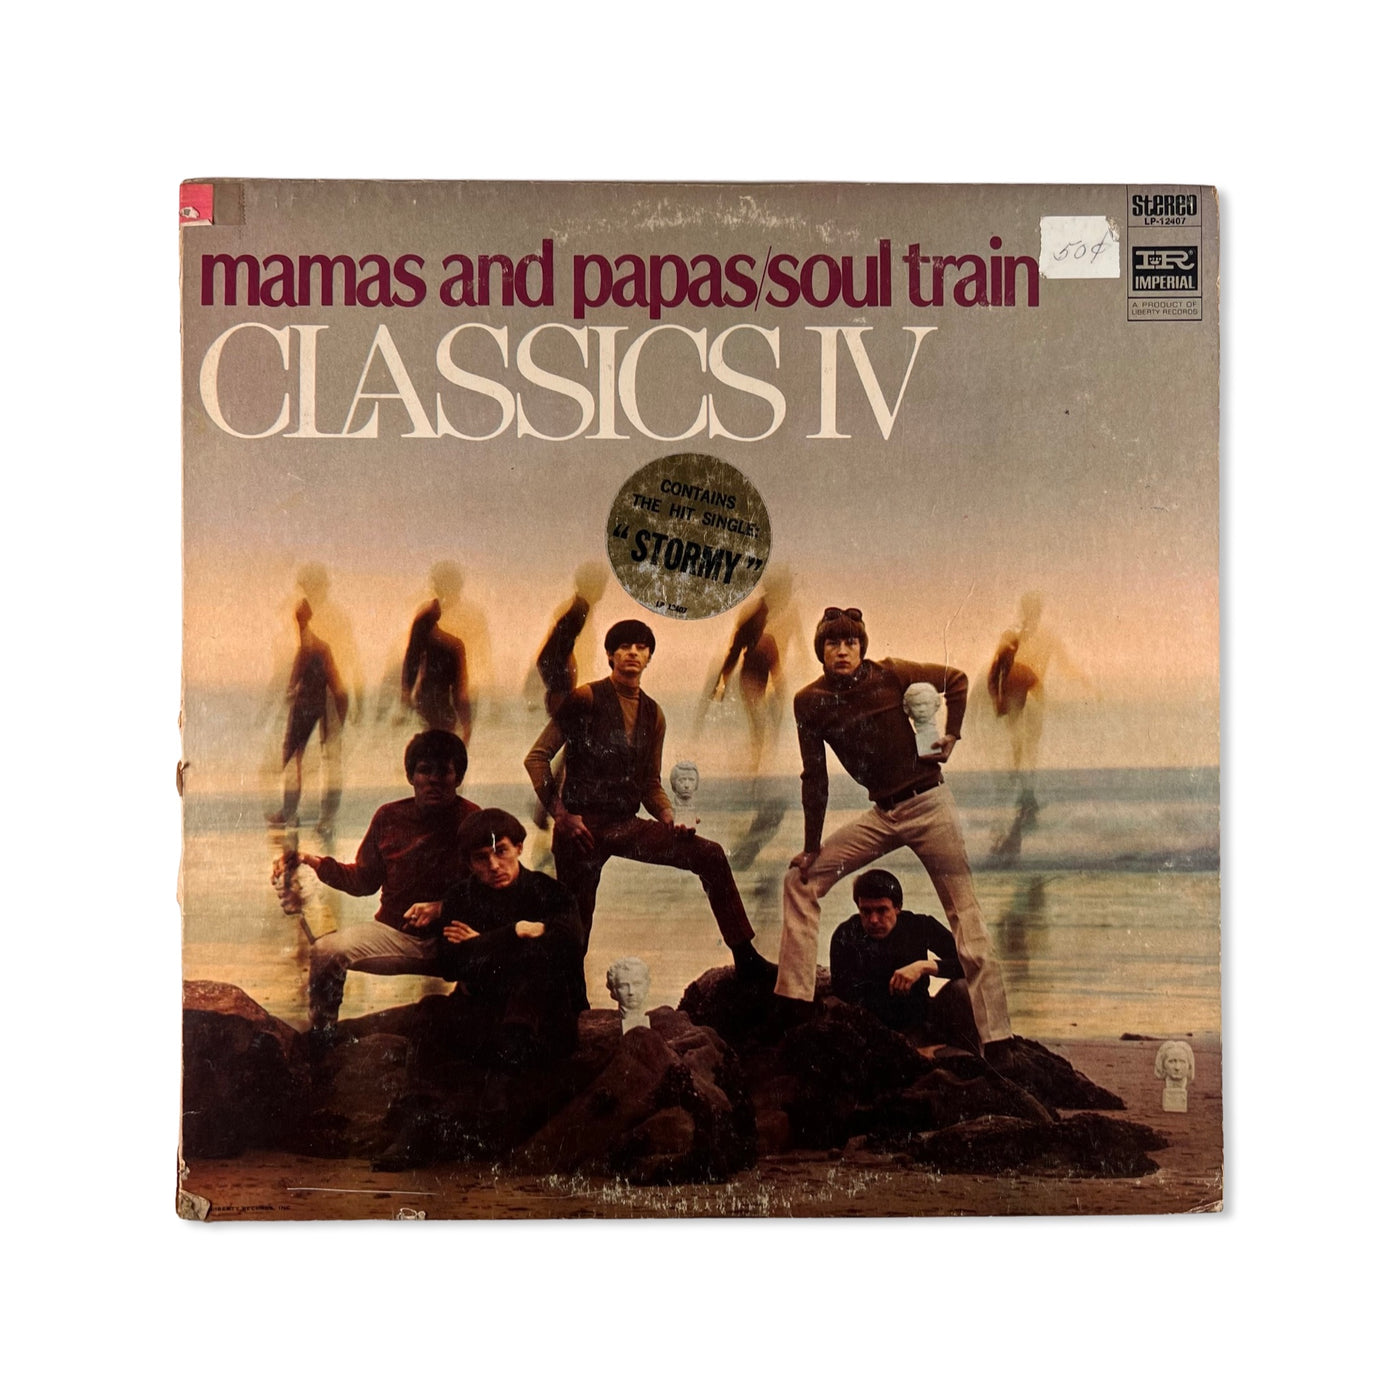 The Classics IV - Mamas And Papas/Soul Train